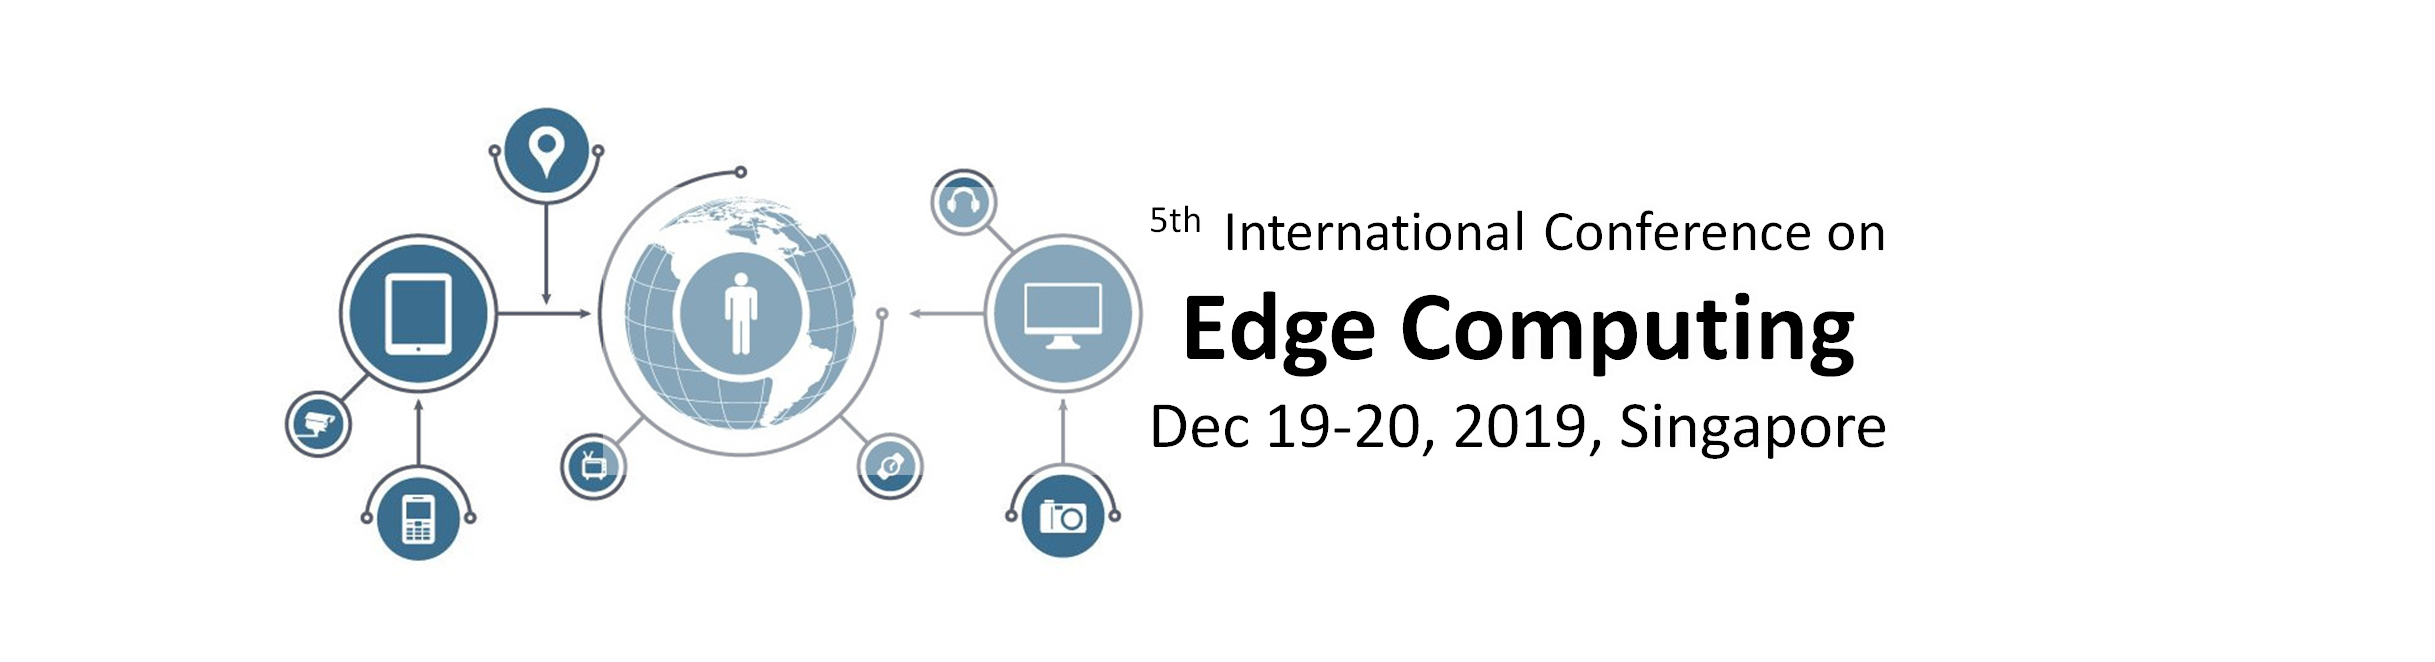 5th International Conference on Edge Computing PENCIS